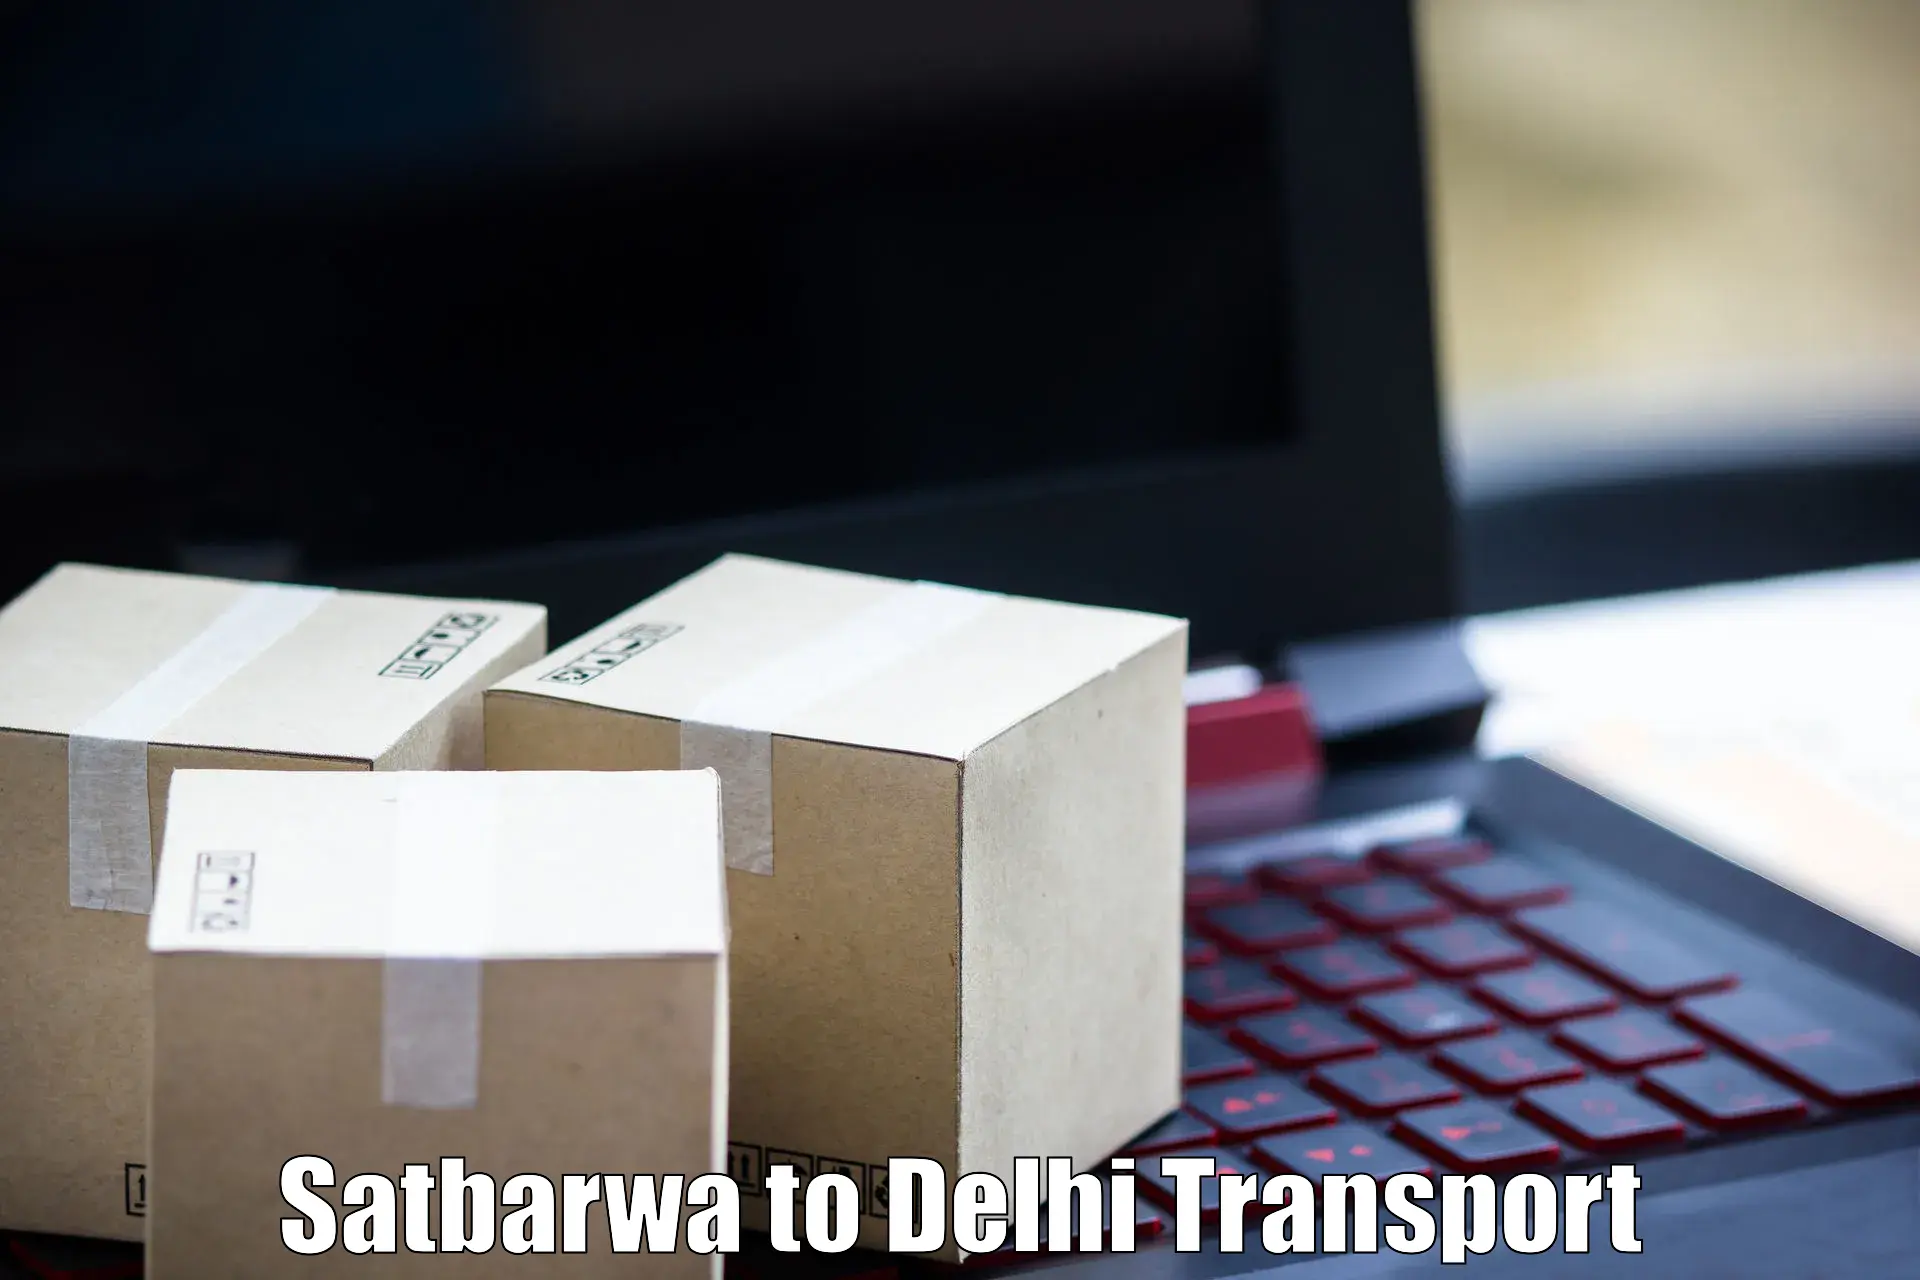 Delivery service Satbarwa to Delhi